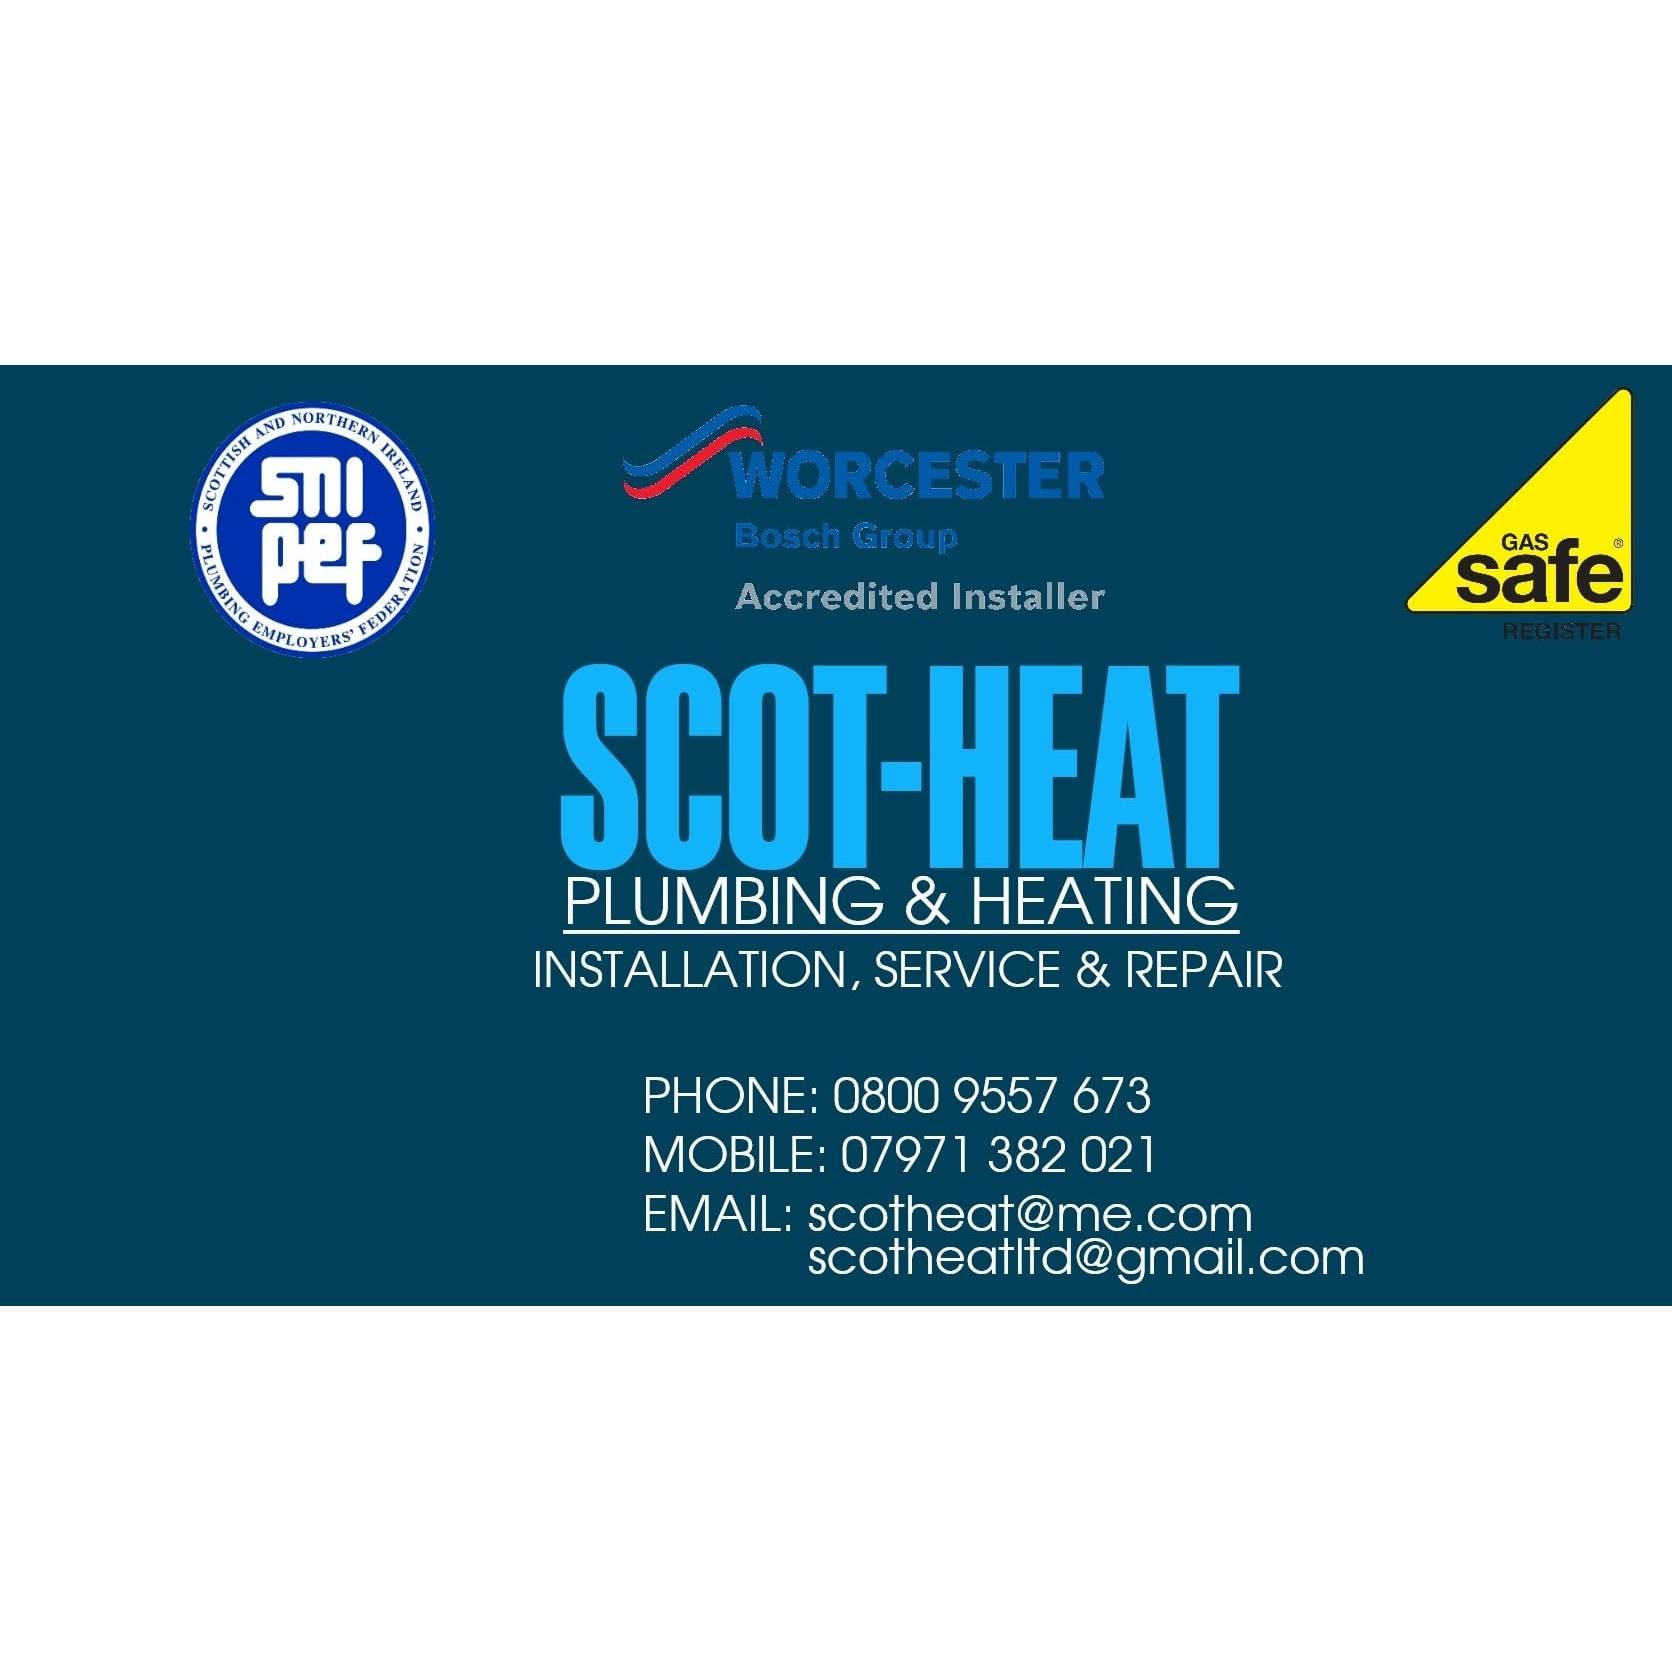 Scot-Heat Plumbing & Heating Ltd Logo